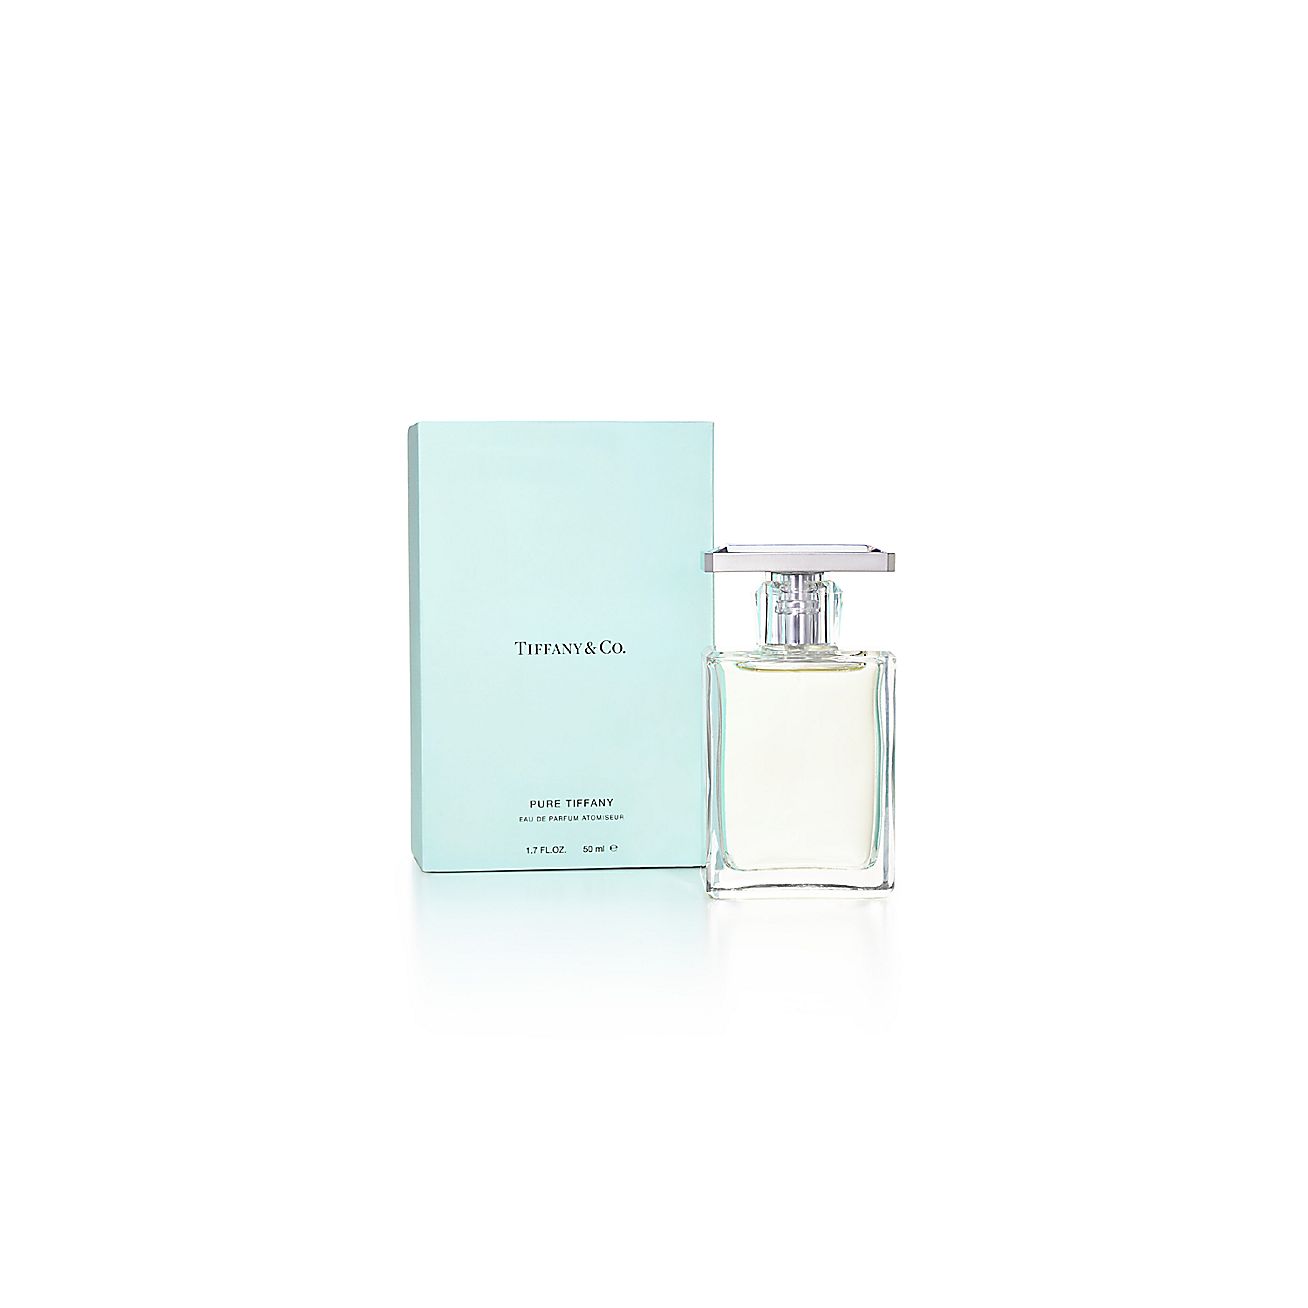 Pure Tiffany® Eau de Parfum, 1.7 ounces. | Tiffany & Co.